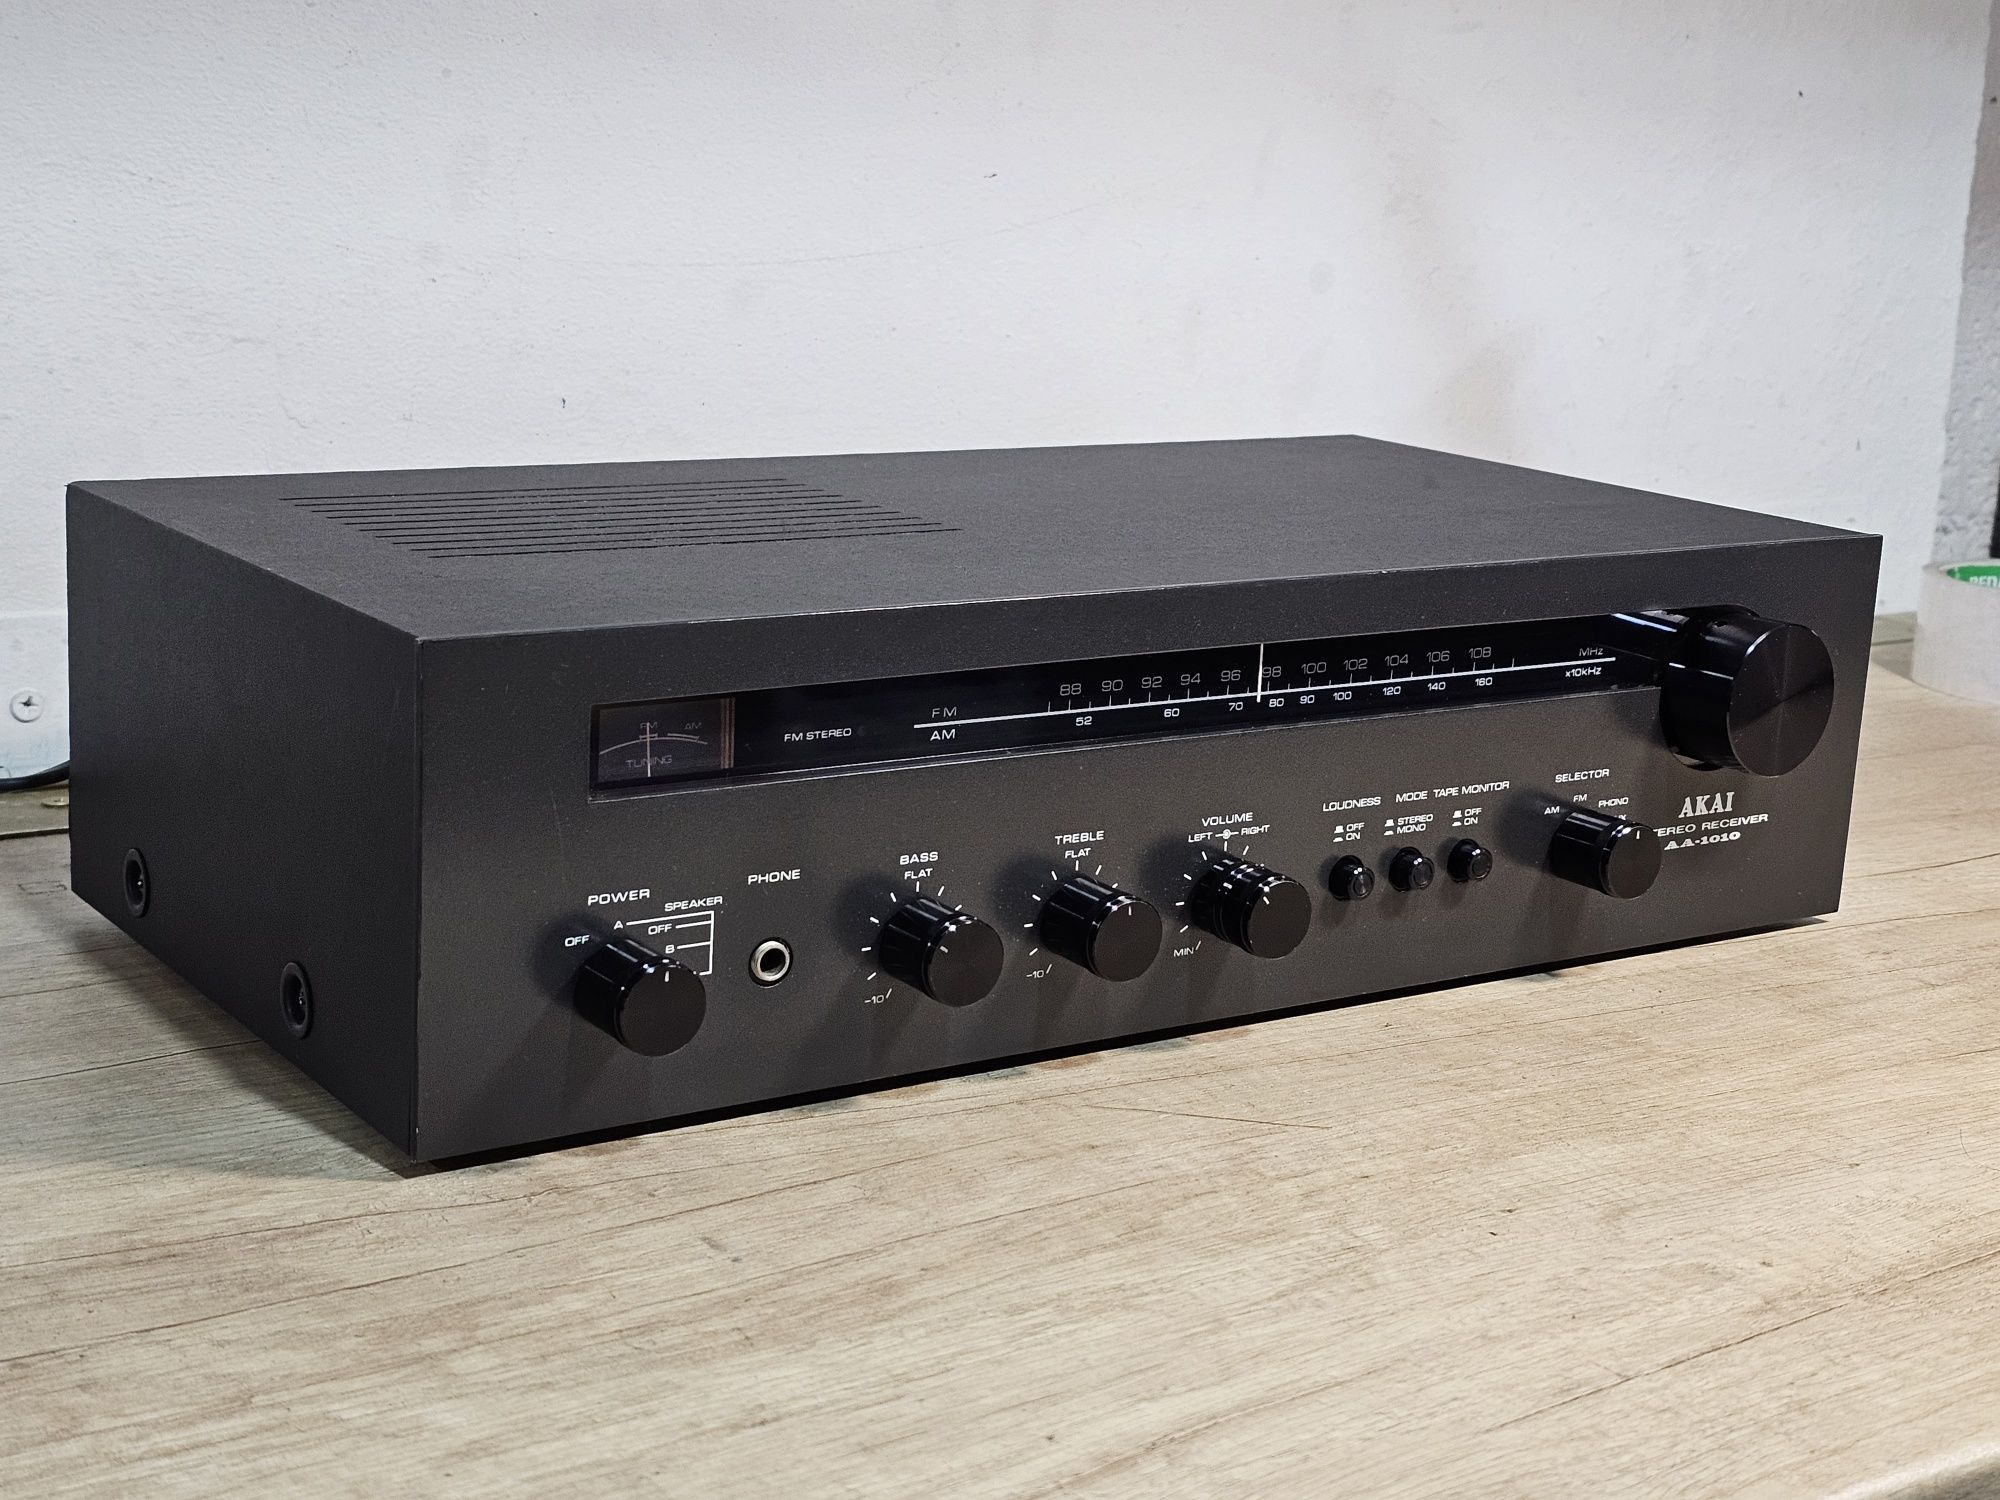 receiver AKAI AA-1010, vintage amplificator tuner black